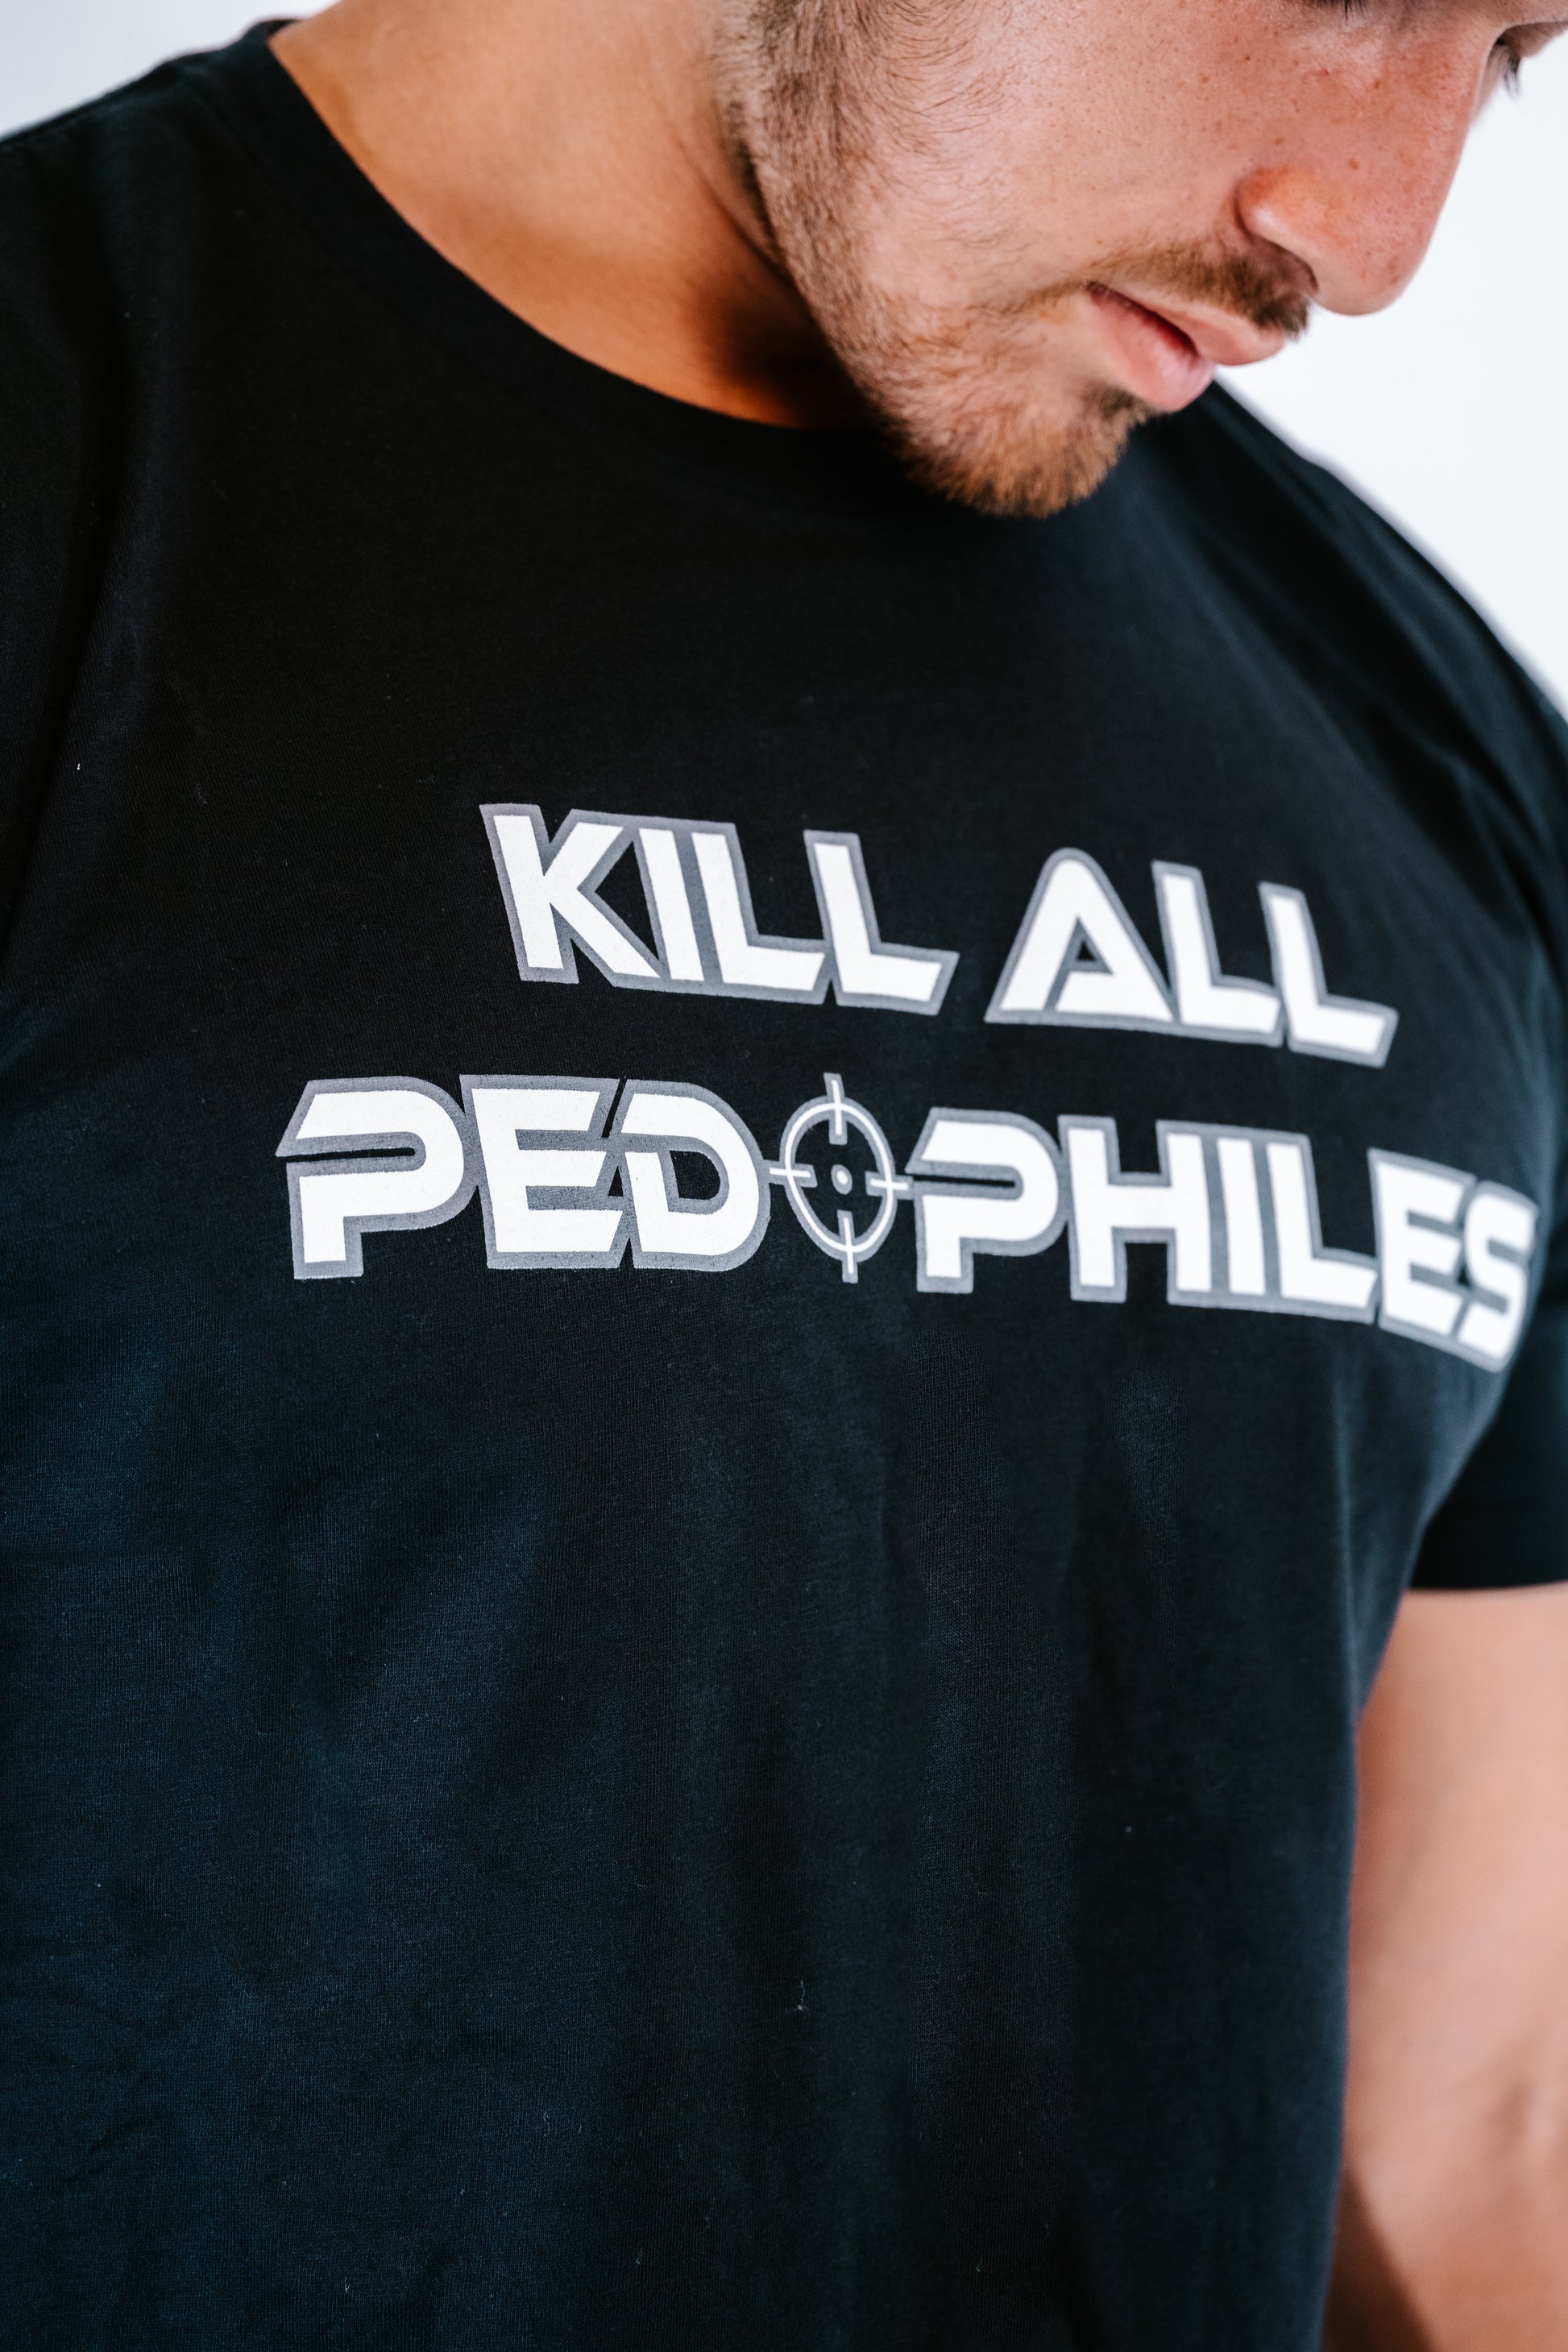 Kill All Pedophiles T-Shirt